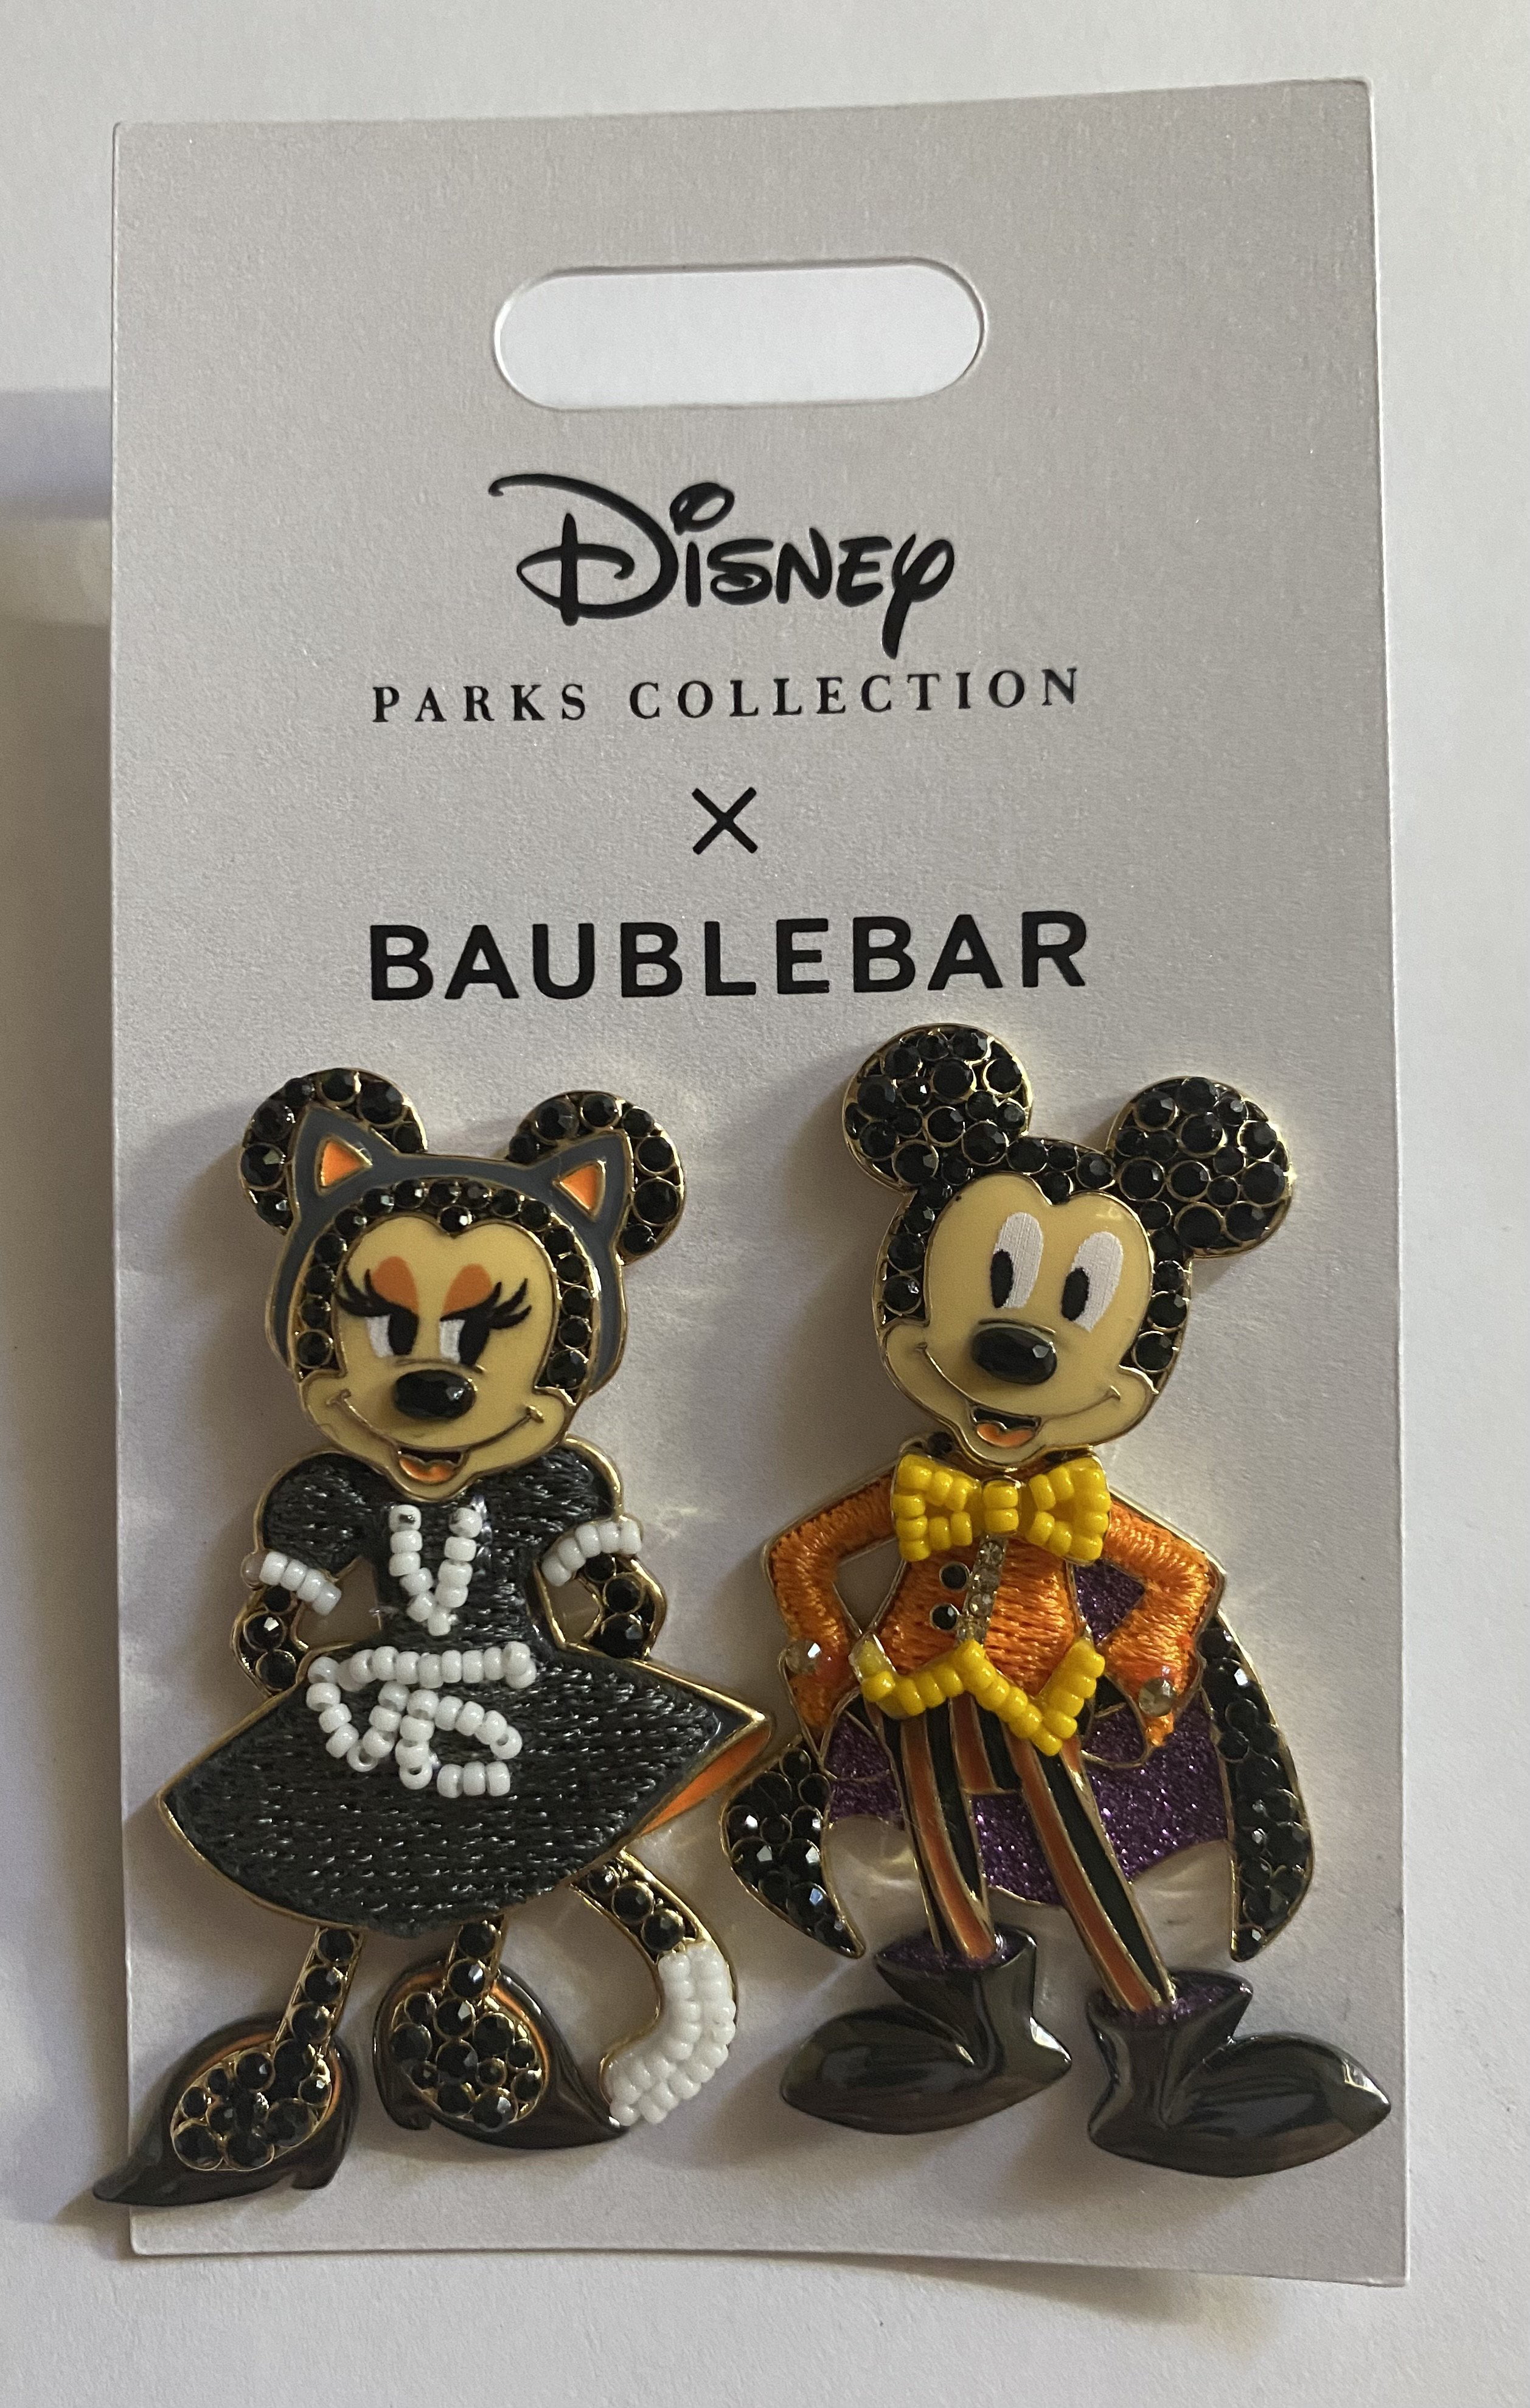 Enamel Sugarfix by Baublebar Disney Minnie & Mickey Mouse Earrings